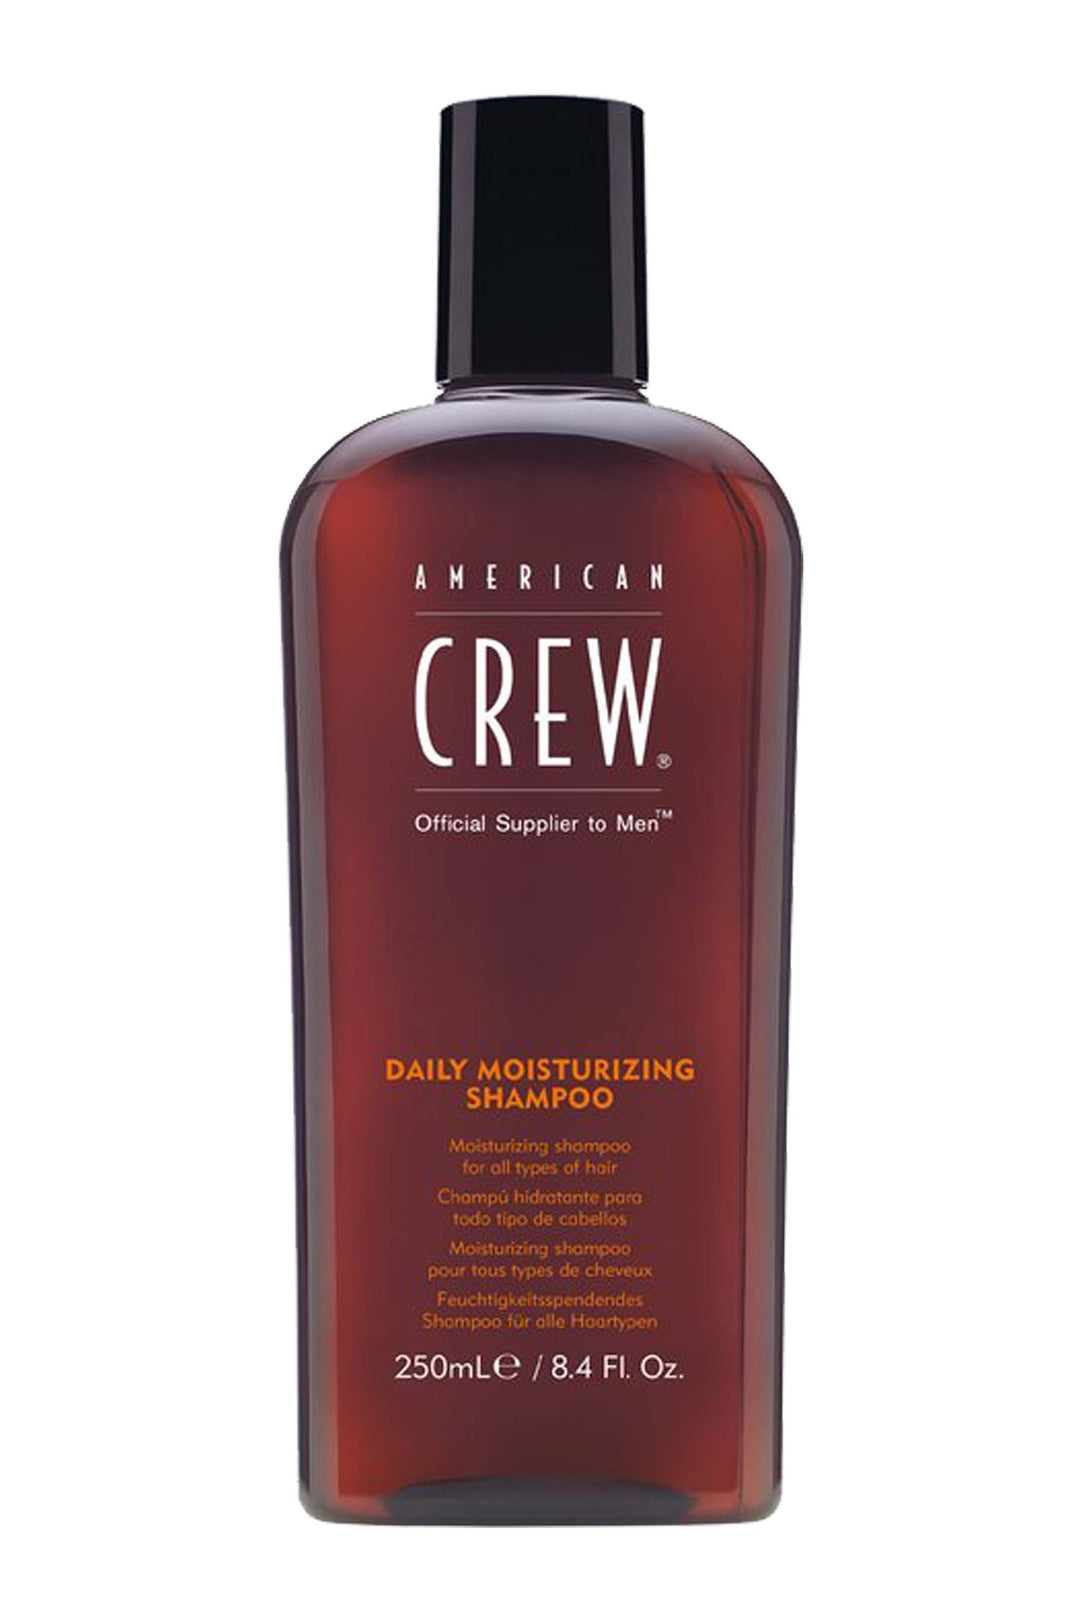 american-crew-daily-moisturizing-shampoo-250ml